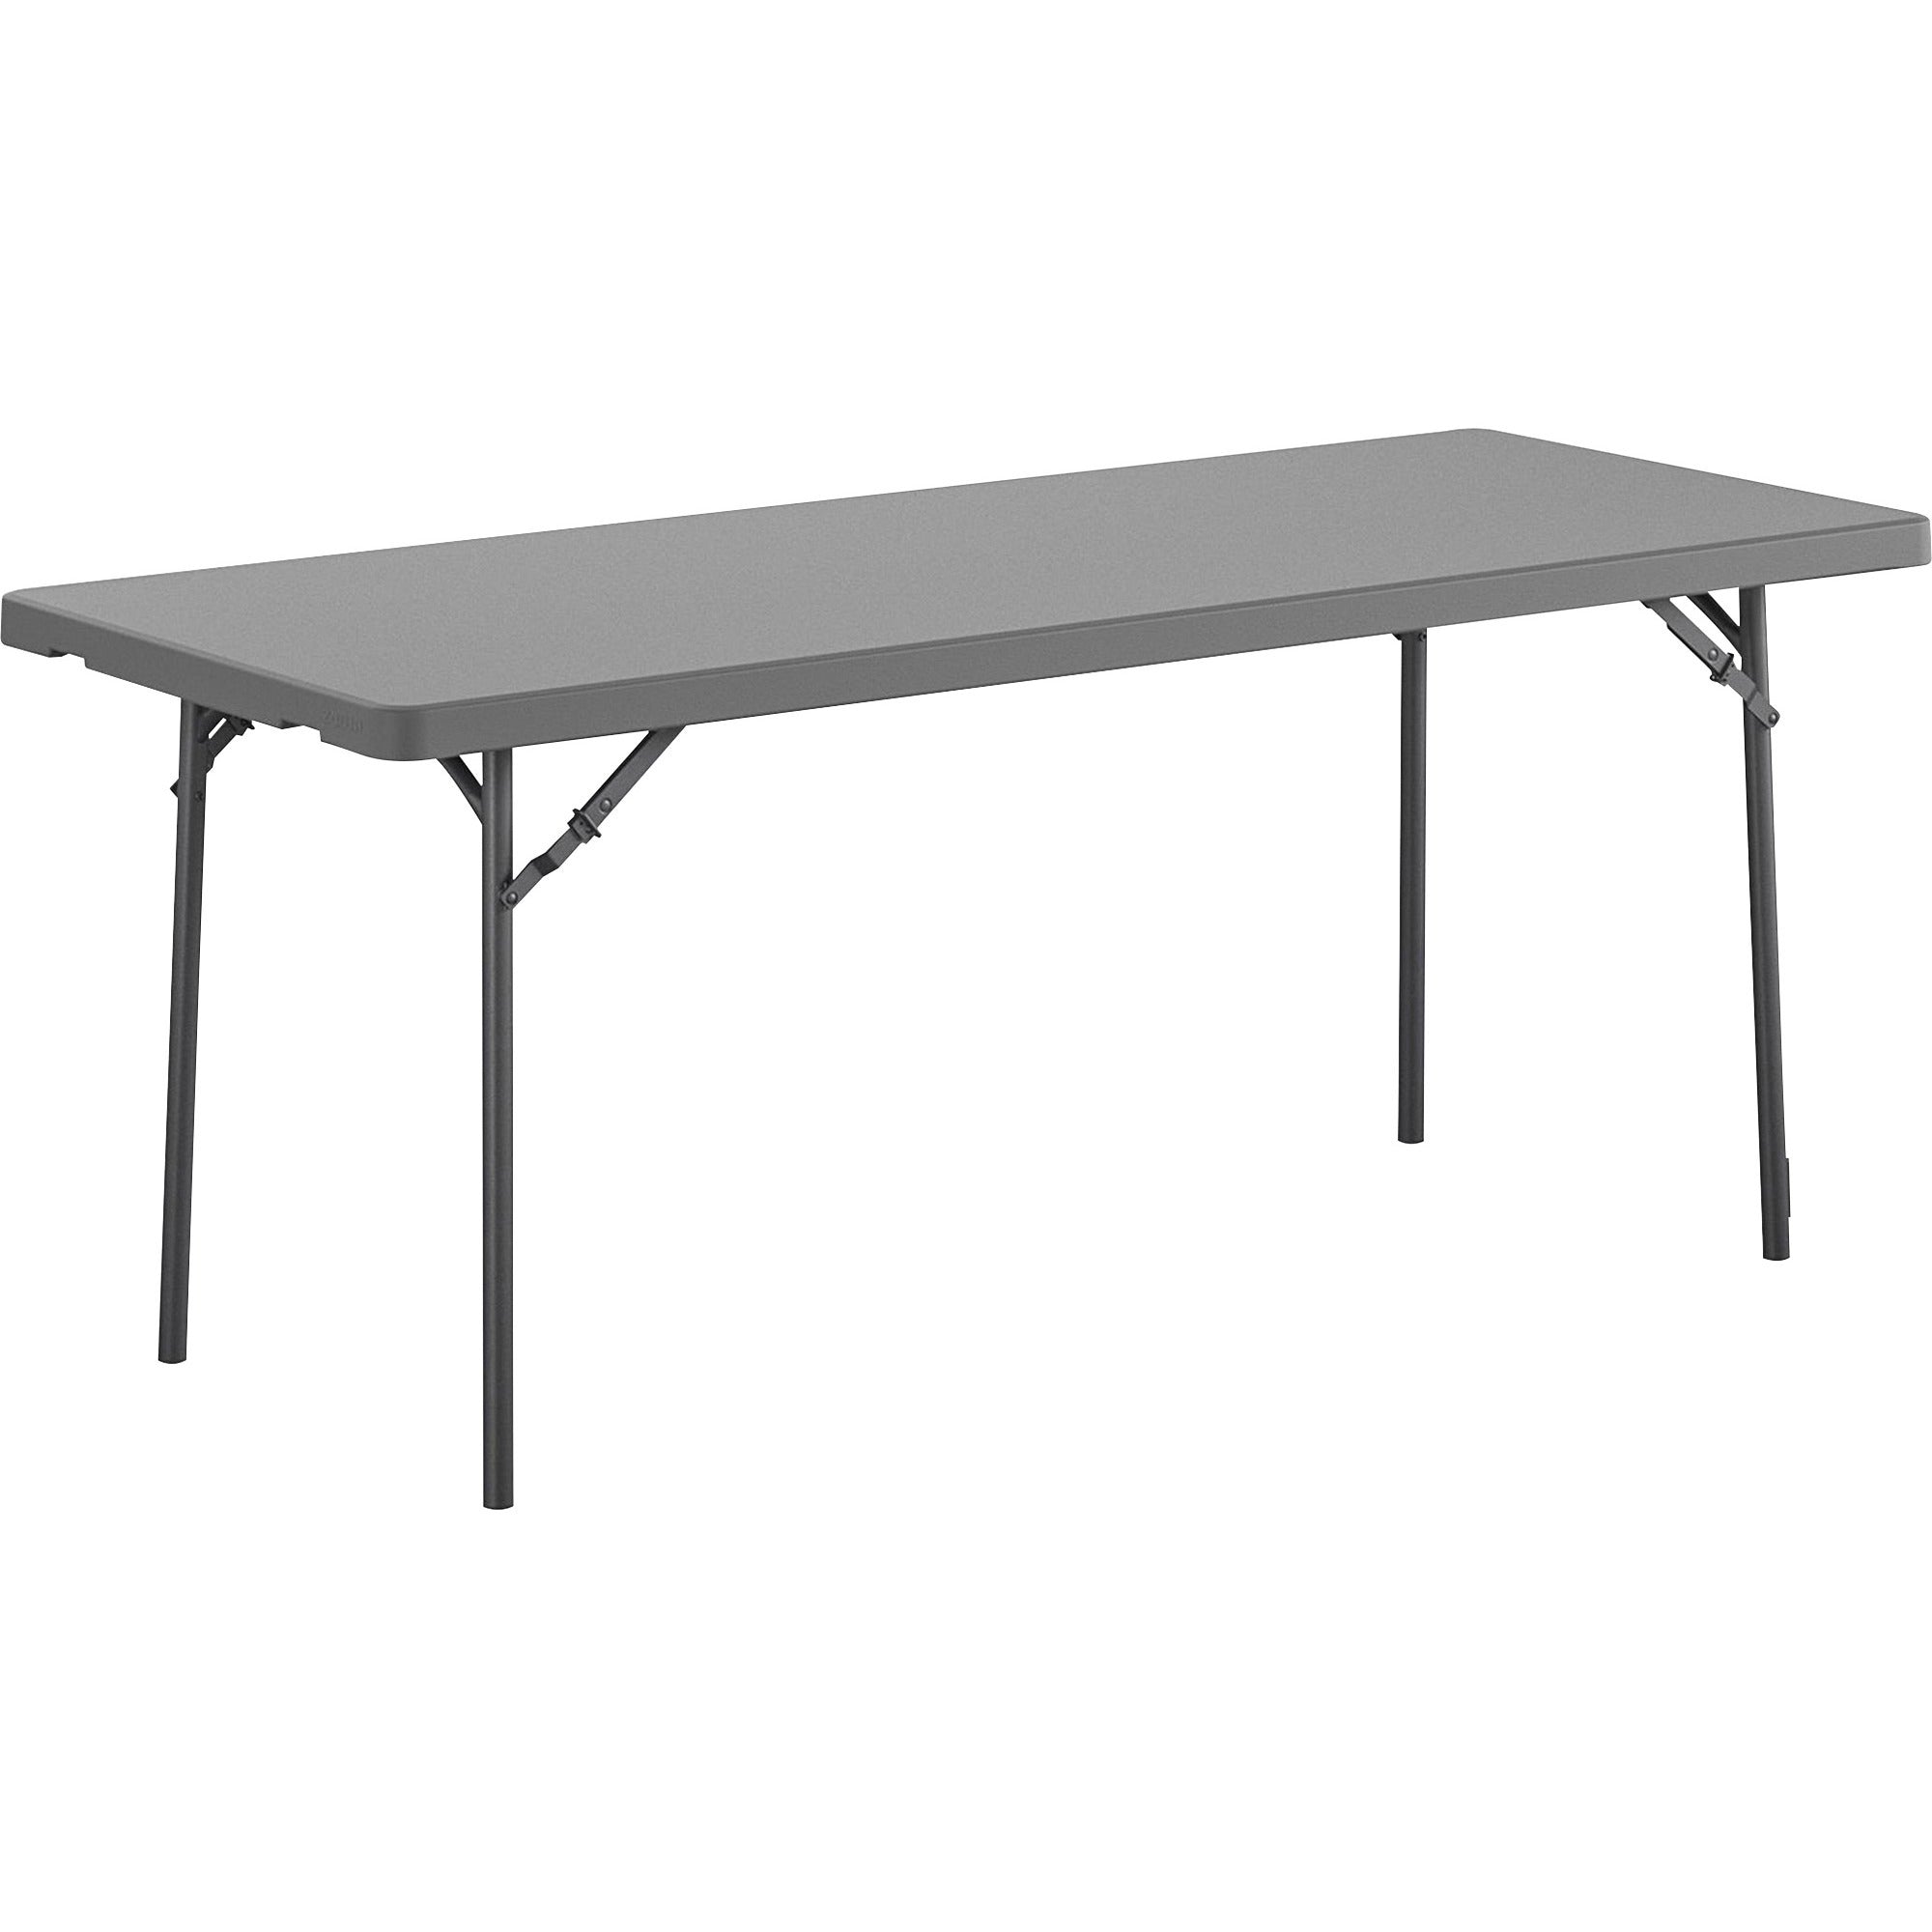 Dorel Zown Corner Blow Mold Large Folding Table - 4 Legs - 800 lb Capacity x 72" Table Top Width x 30" Table Top Depth - 29.25" Height - Gray - High-density Polyethylene (HDPE), Resin - 1 Each - 1